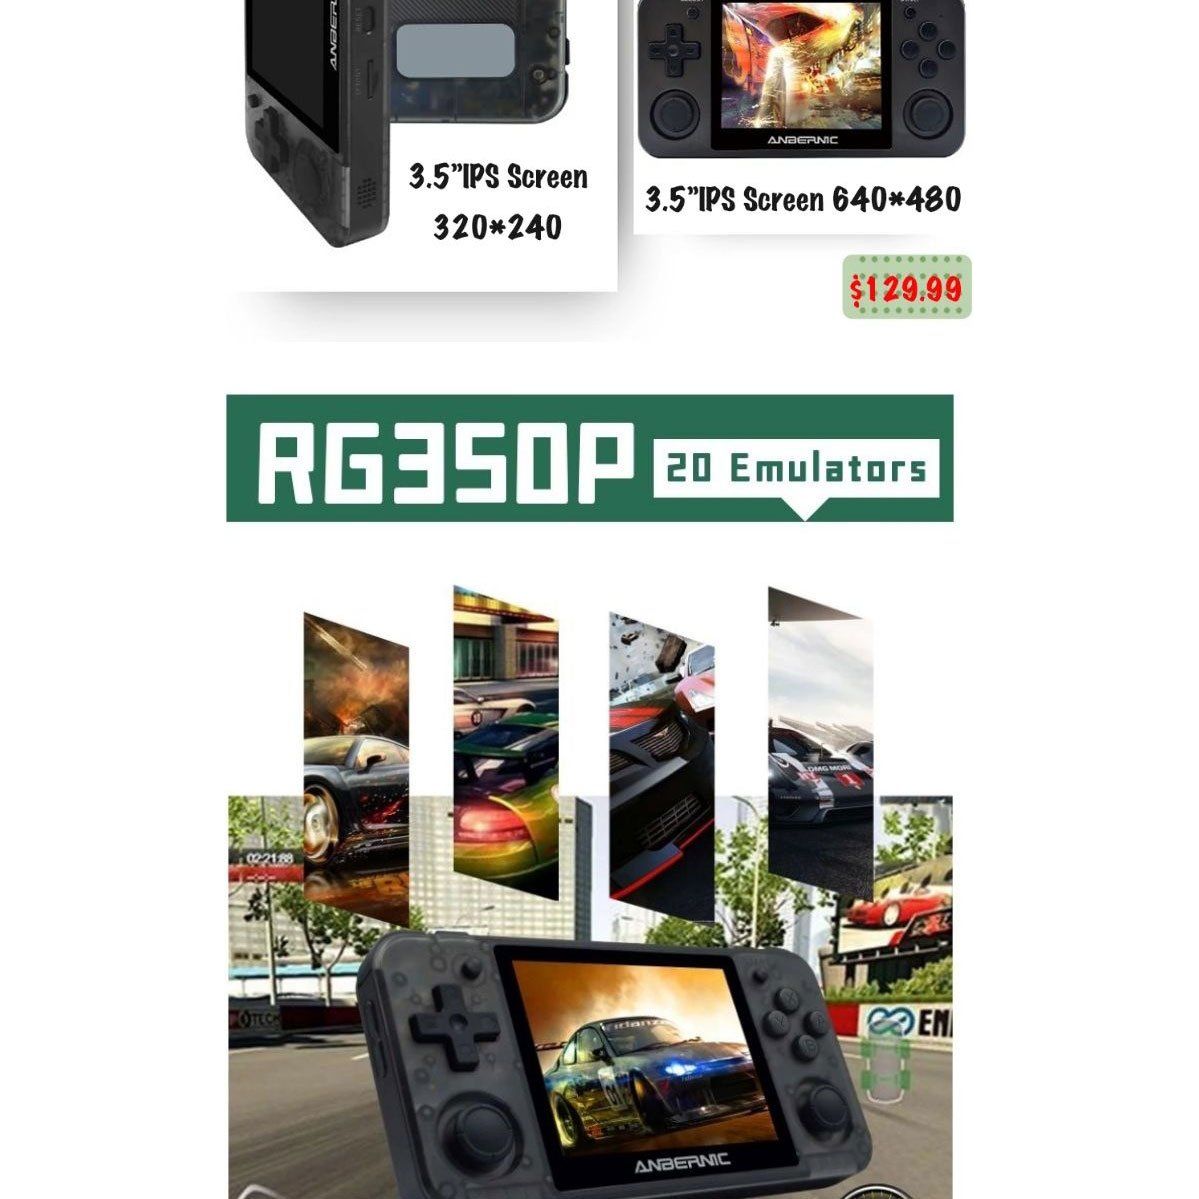 RG350P RG351P Handheld Game Player HDMI Video Player PS1 64Bit IPS